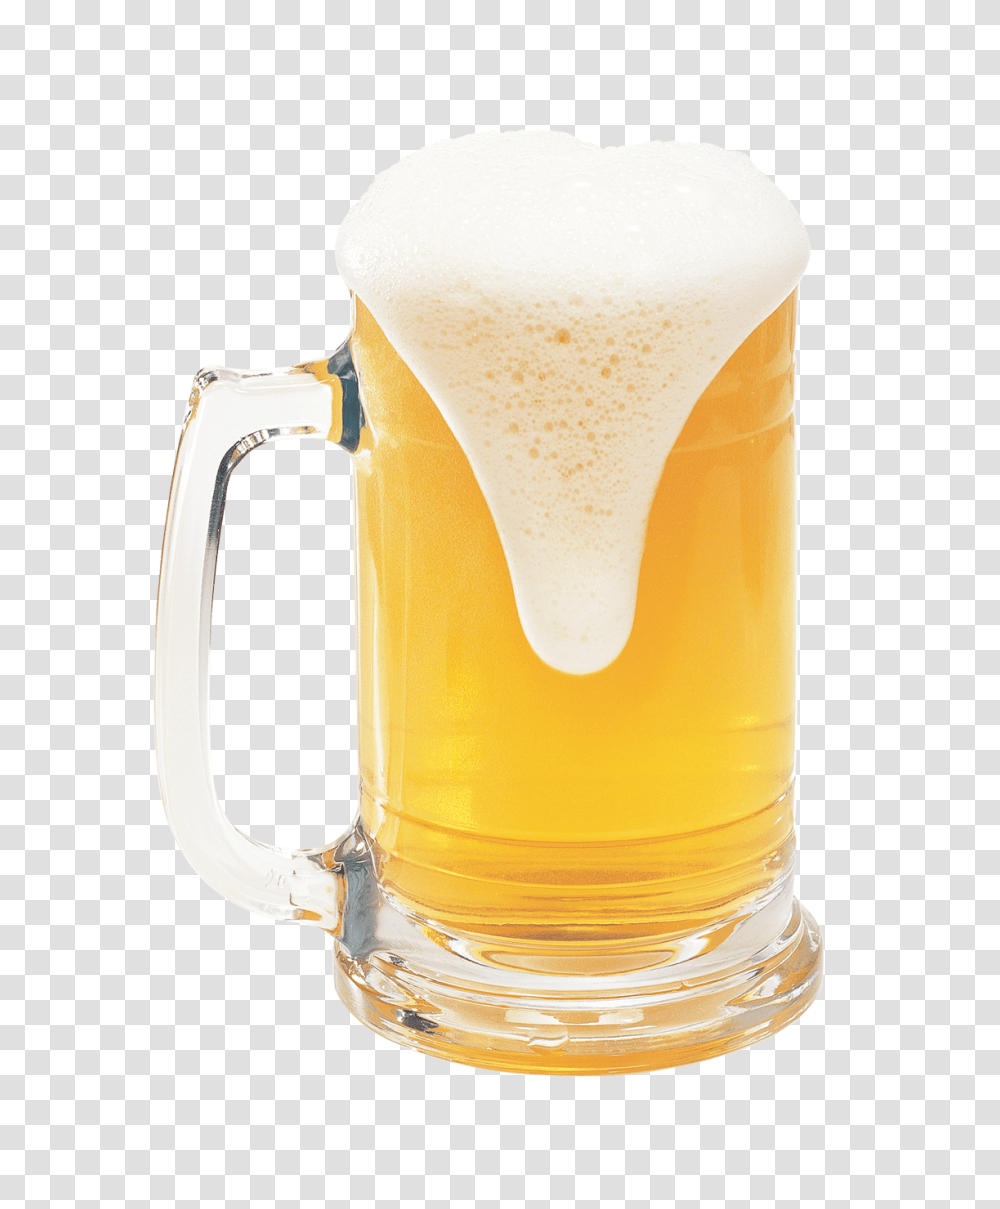 Mug With Beer Image, Drink, Glass, Beer Glass, Alcohol Transparent Png